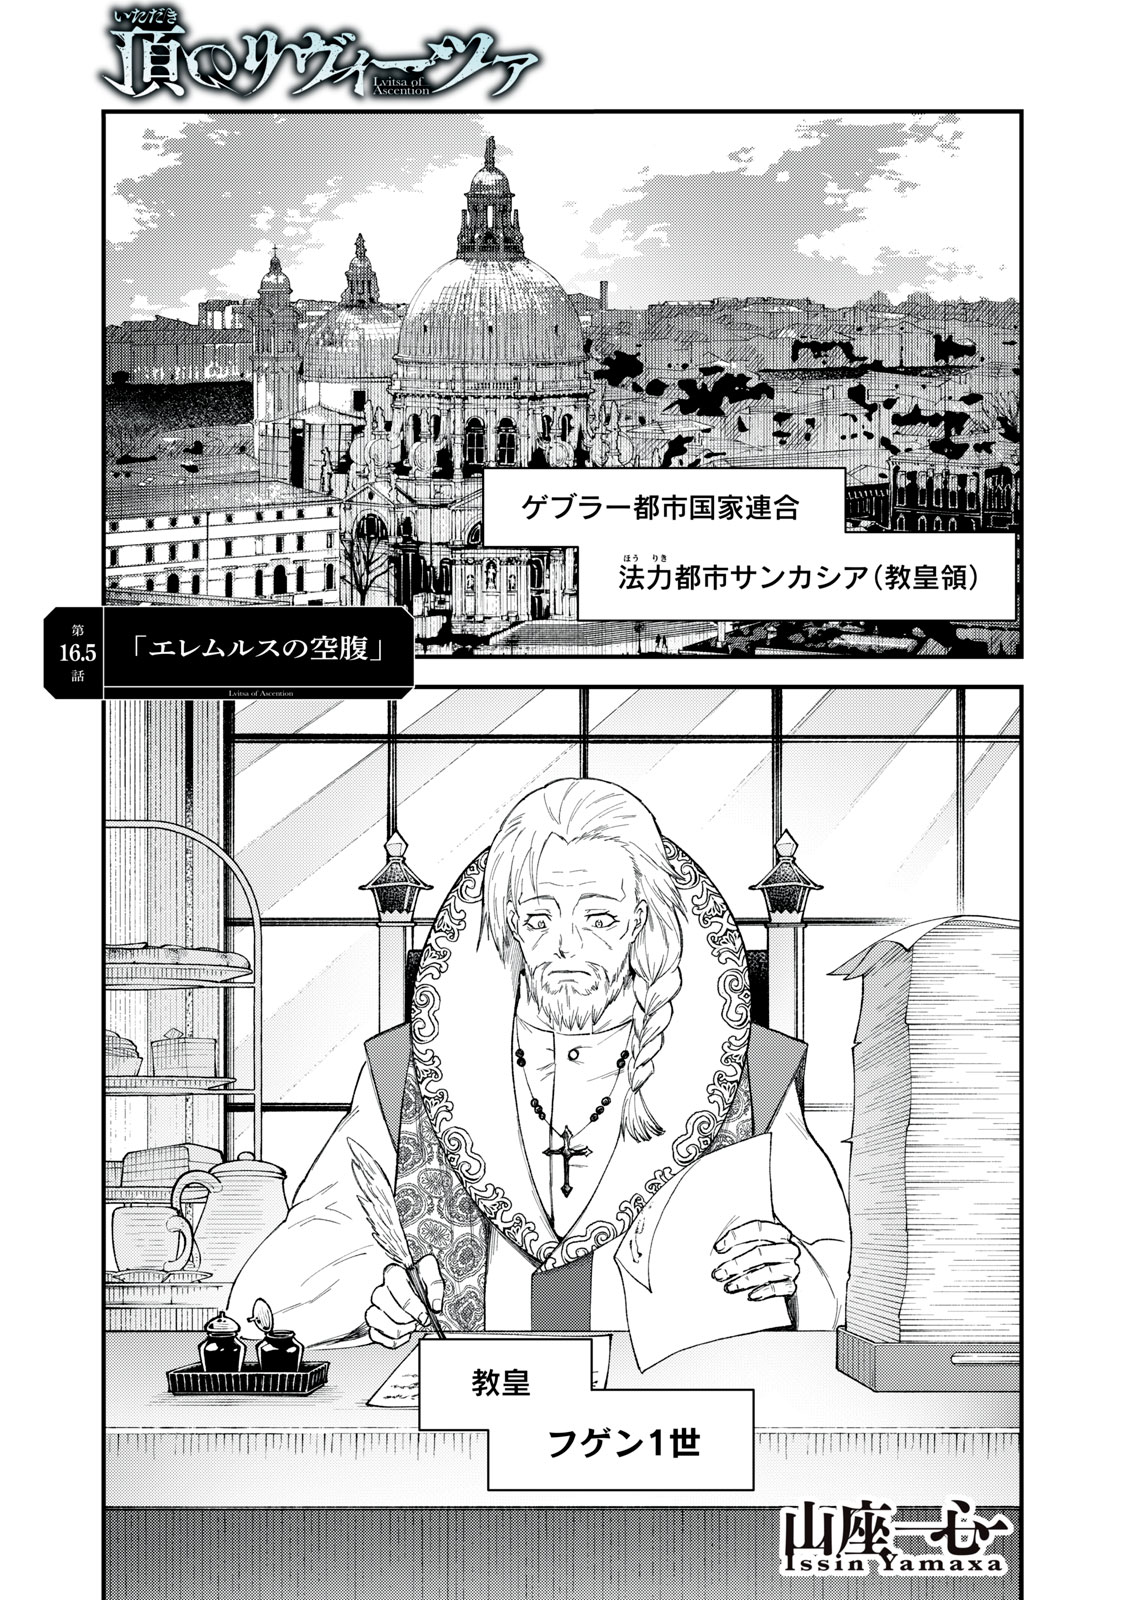 Itadaki no Lvitsa - Chapter 16.5 - Page 1